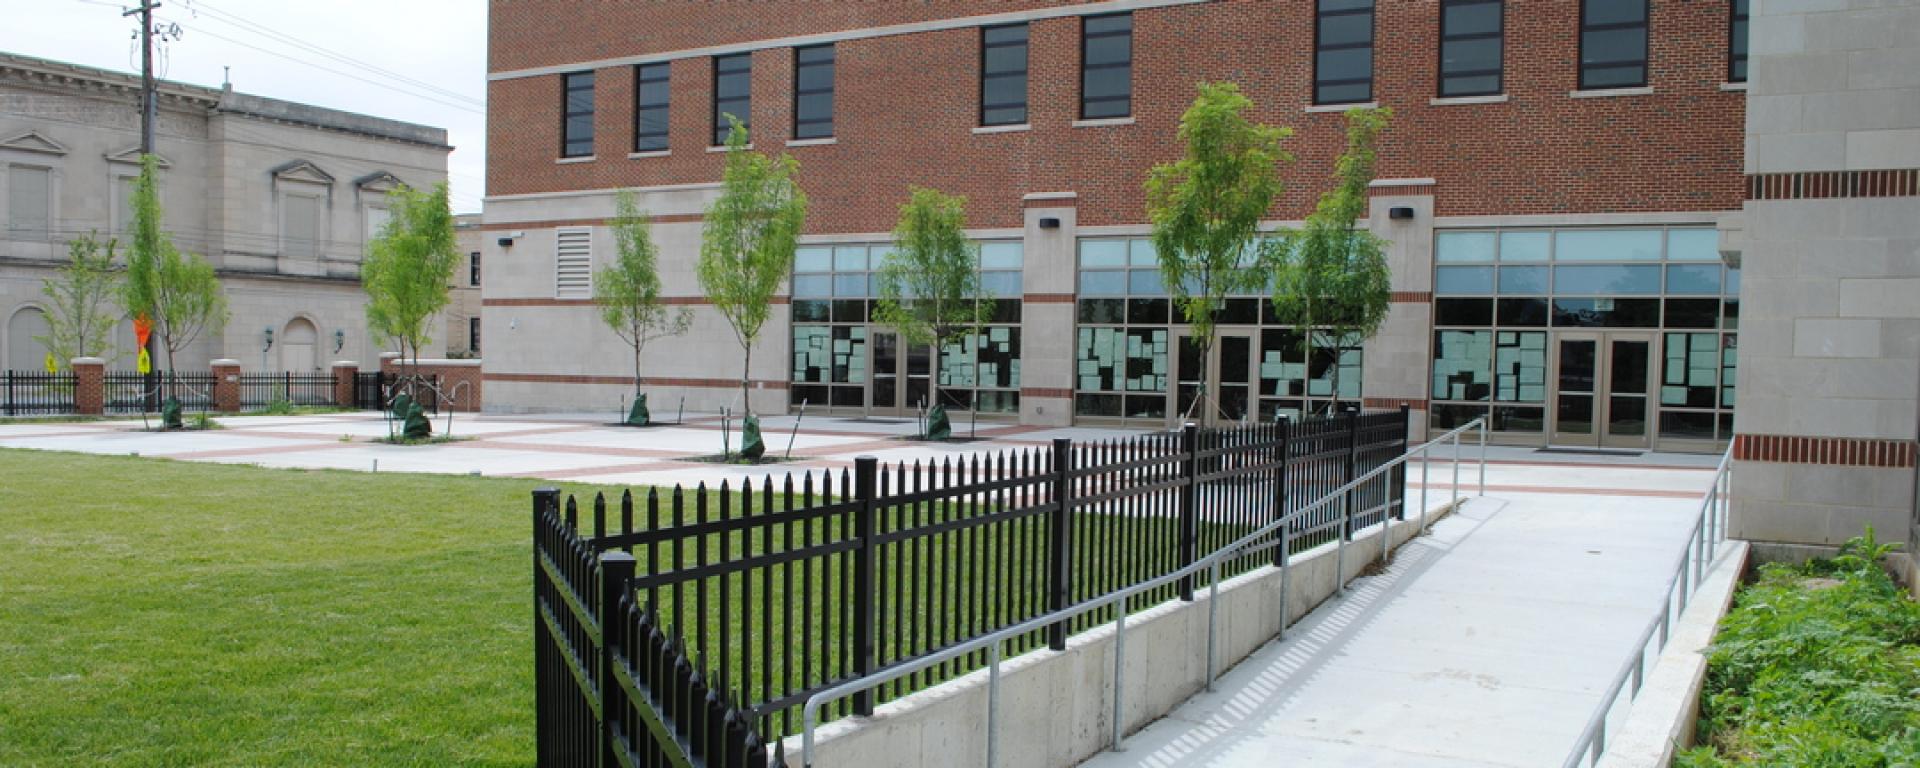 Courtyard view of Covington Latin School